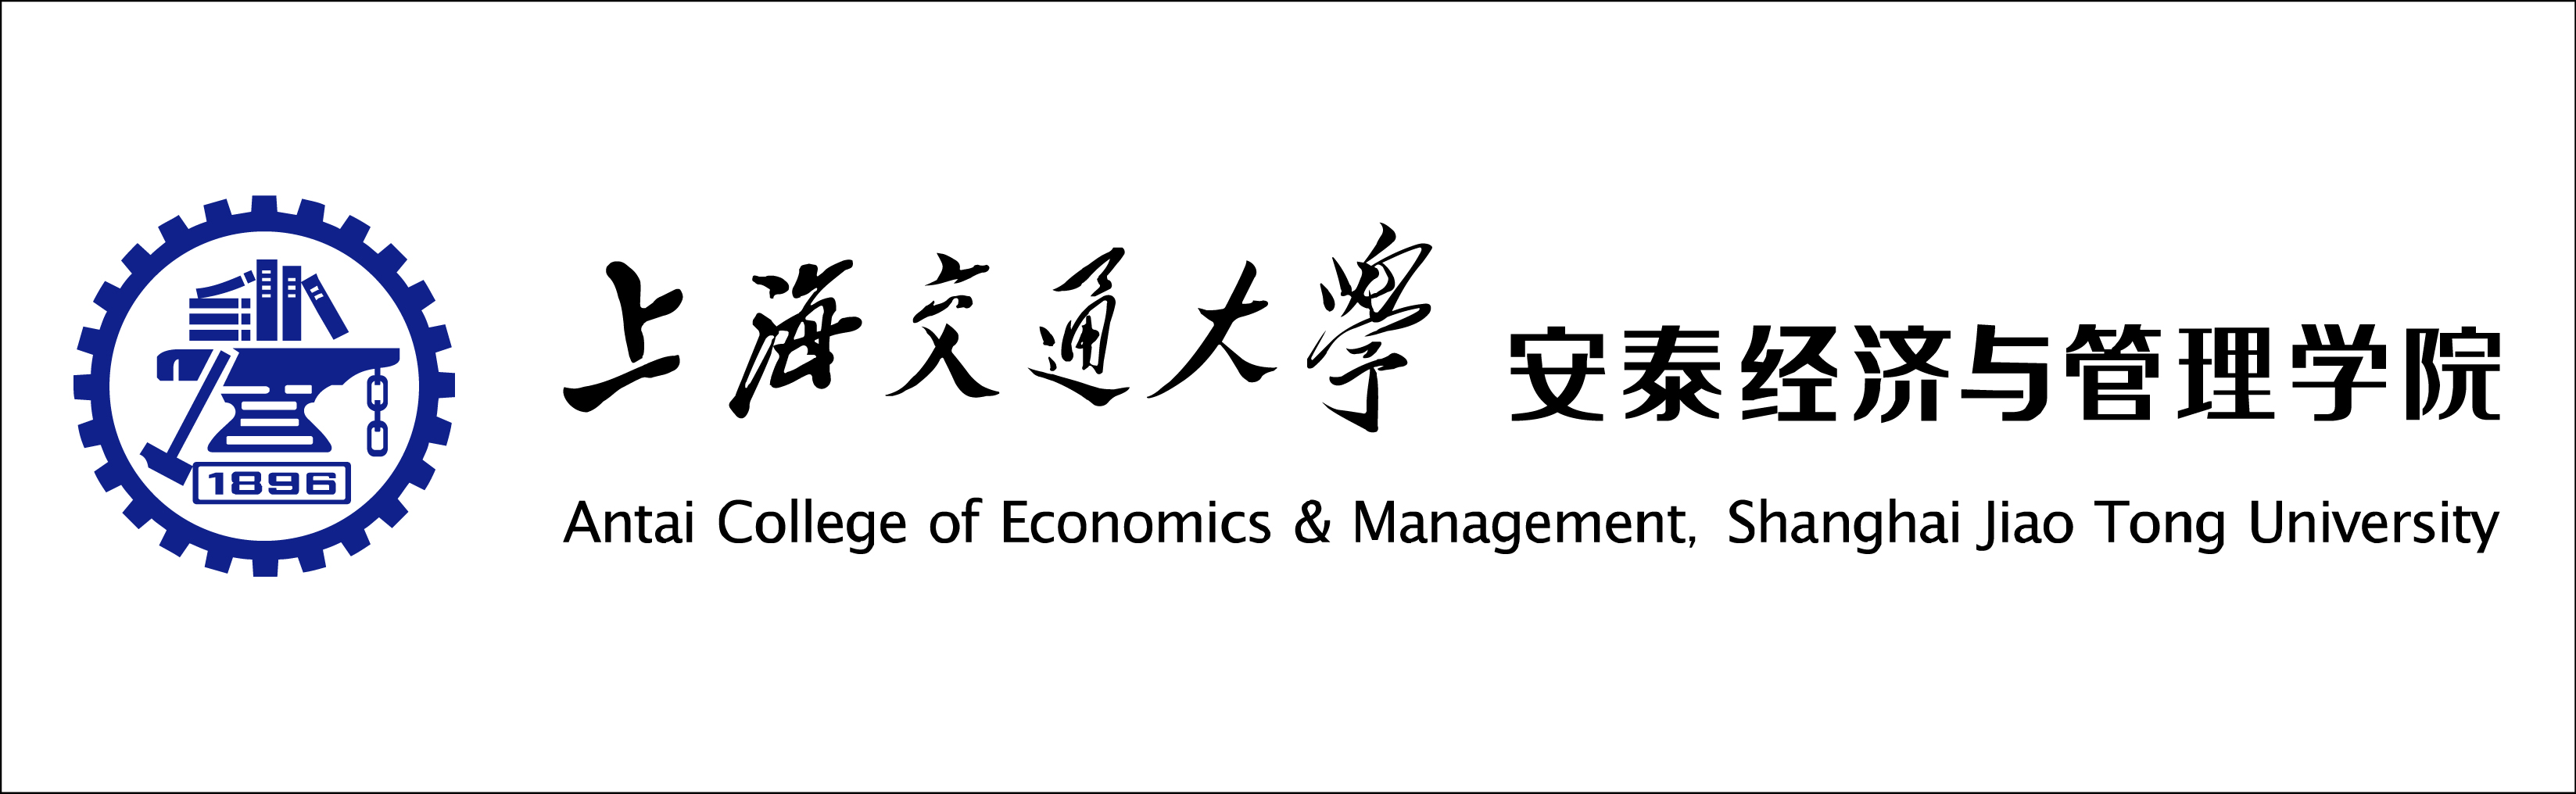 Logo Shanghai Jiao Tong University- Antai College of Economics and Management